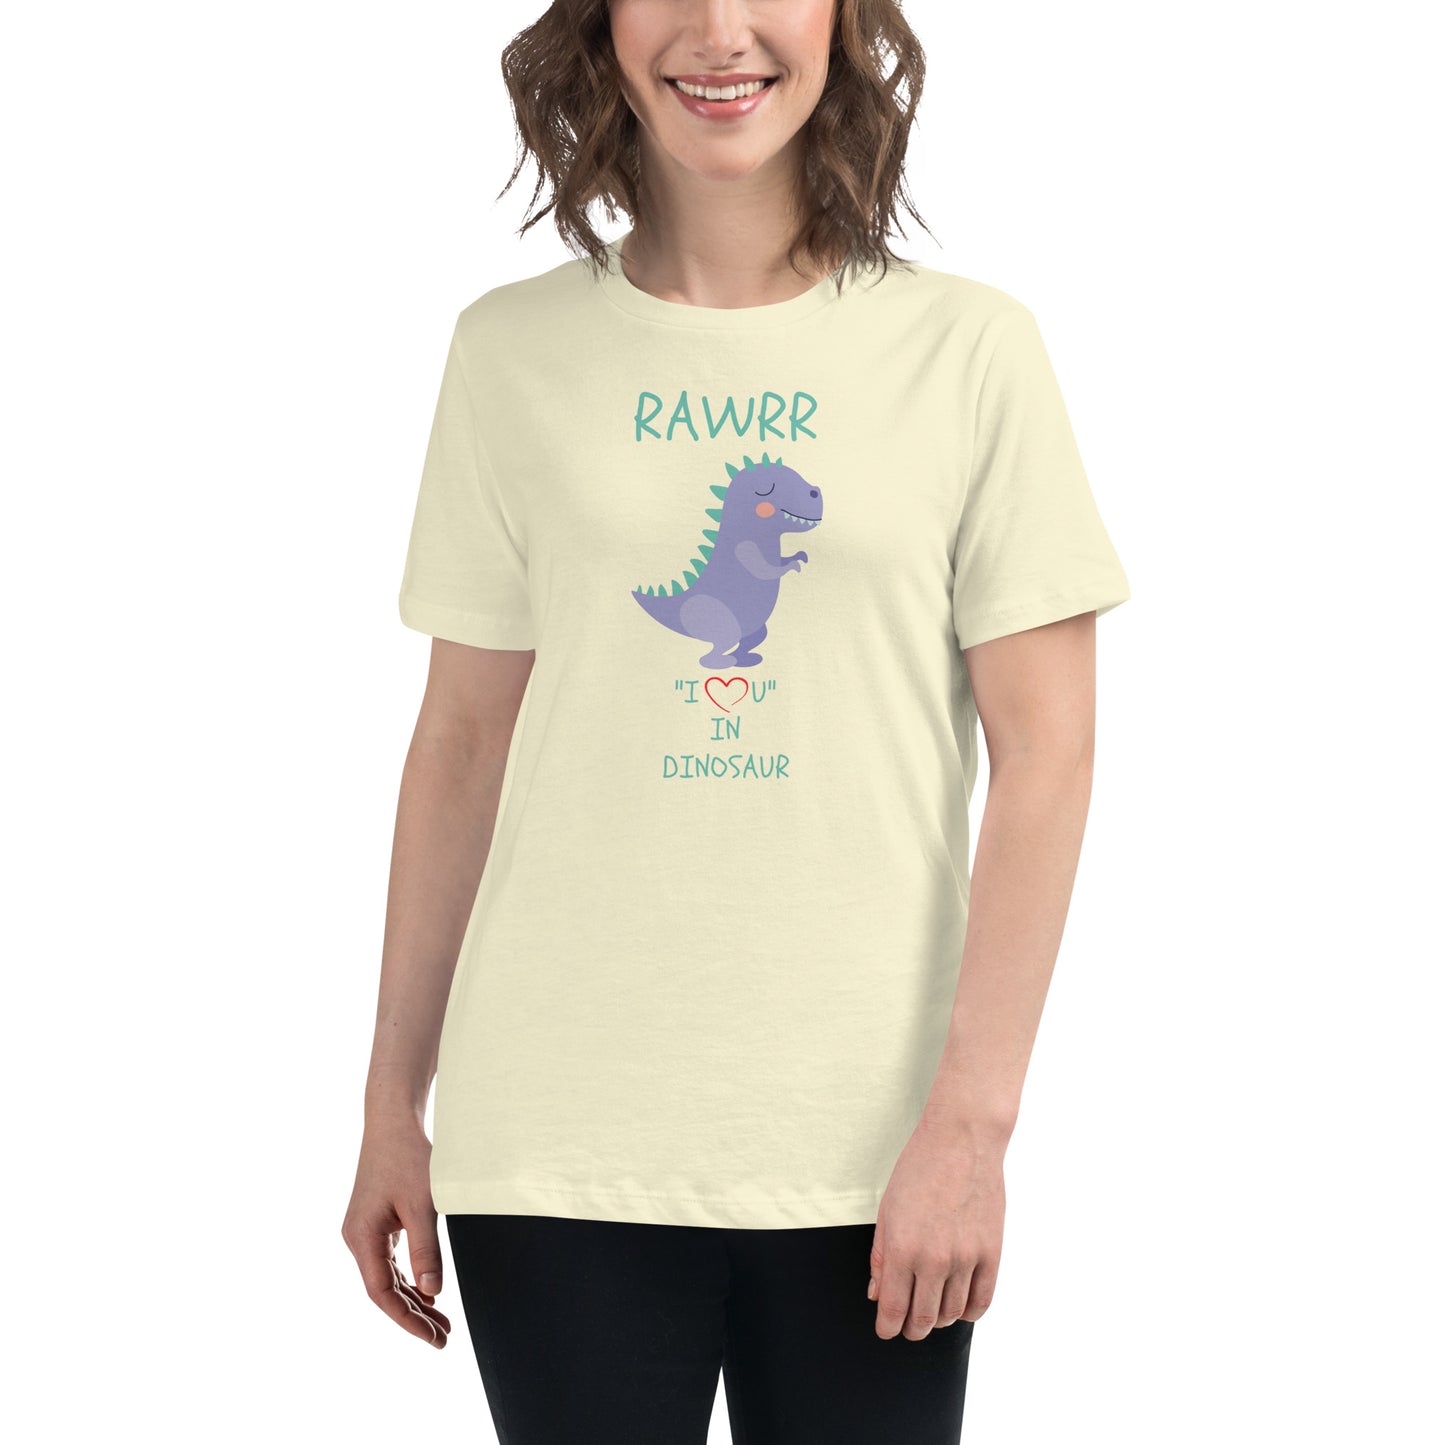 RAWRR "I Love You" In Dinosaur Women's Relaxed T-Shirt